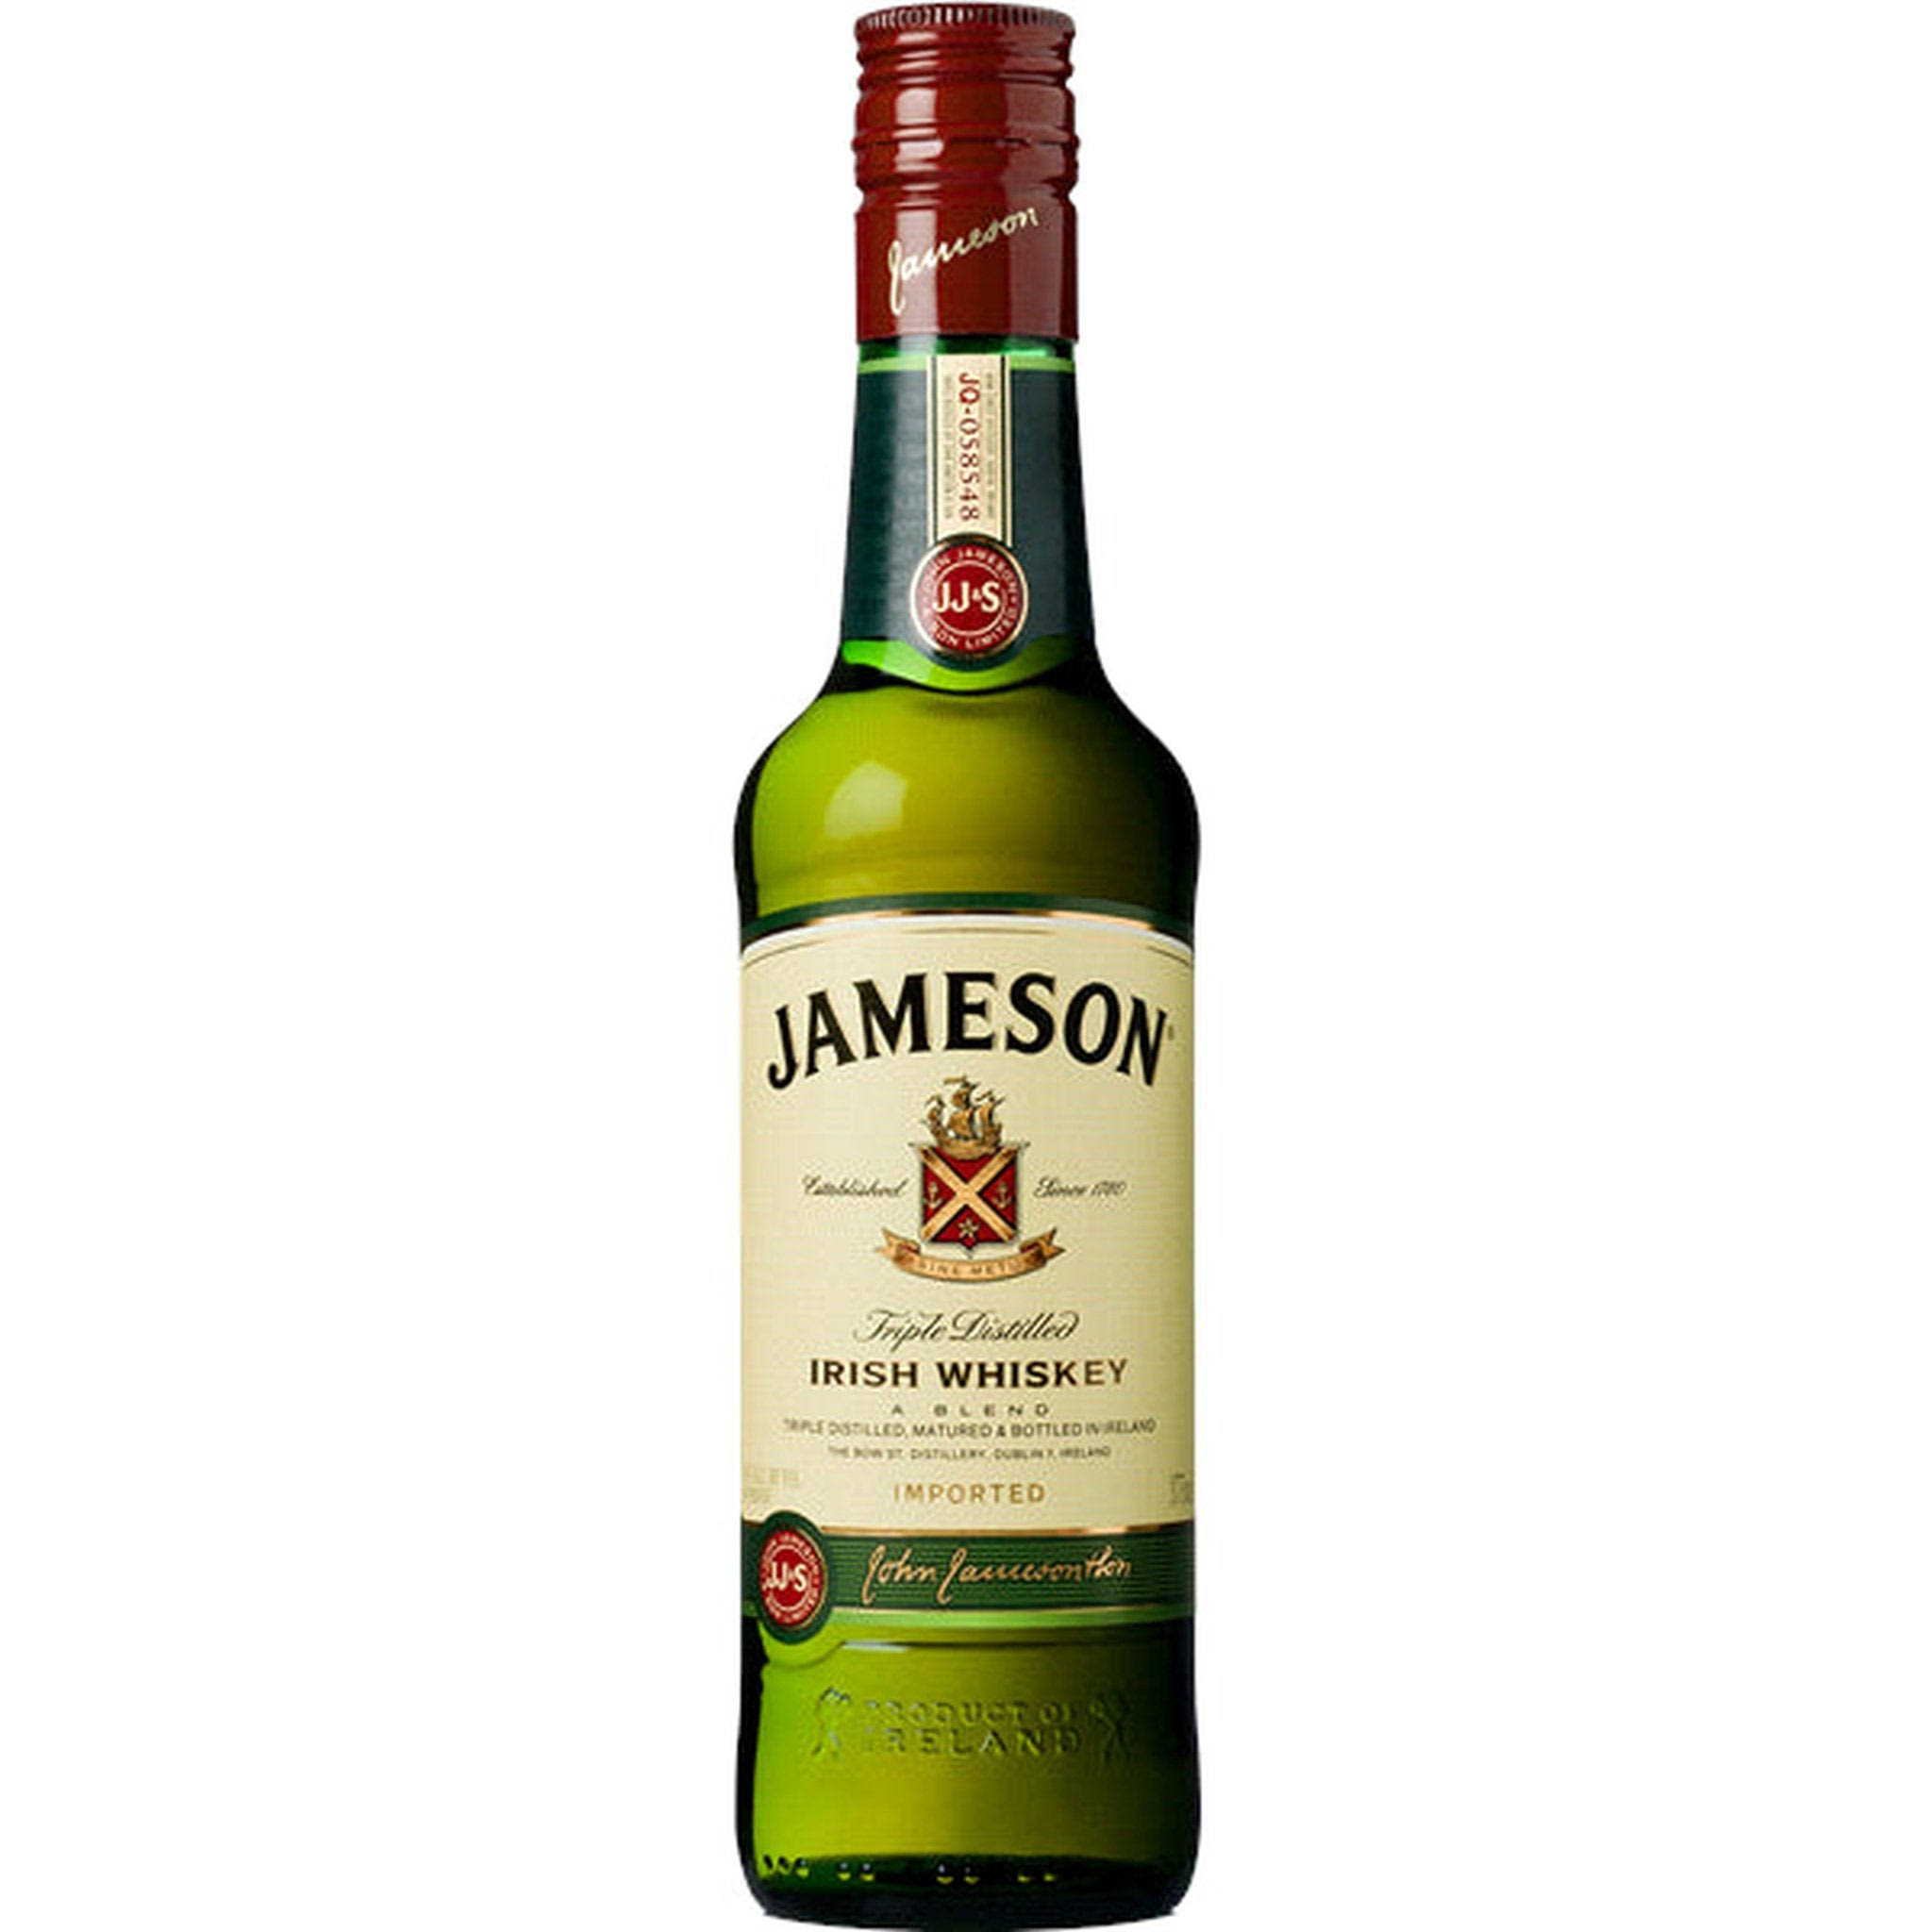 Jameson Irish Whiskey - 375 ml bottle